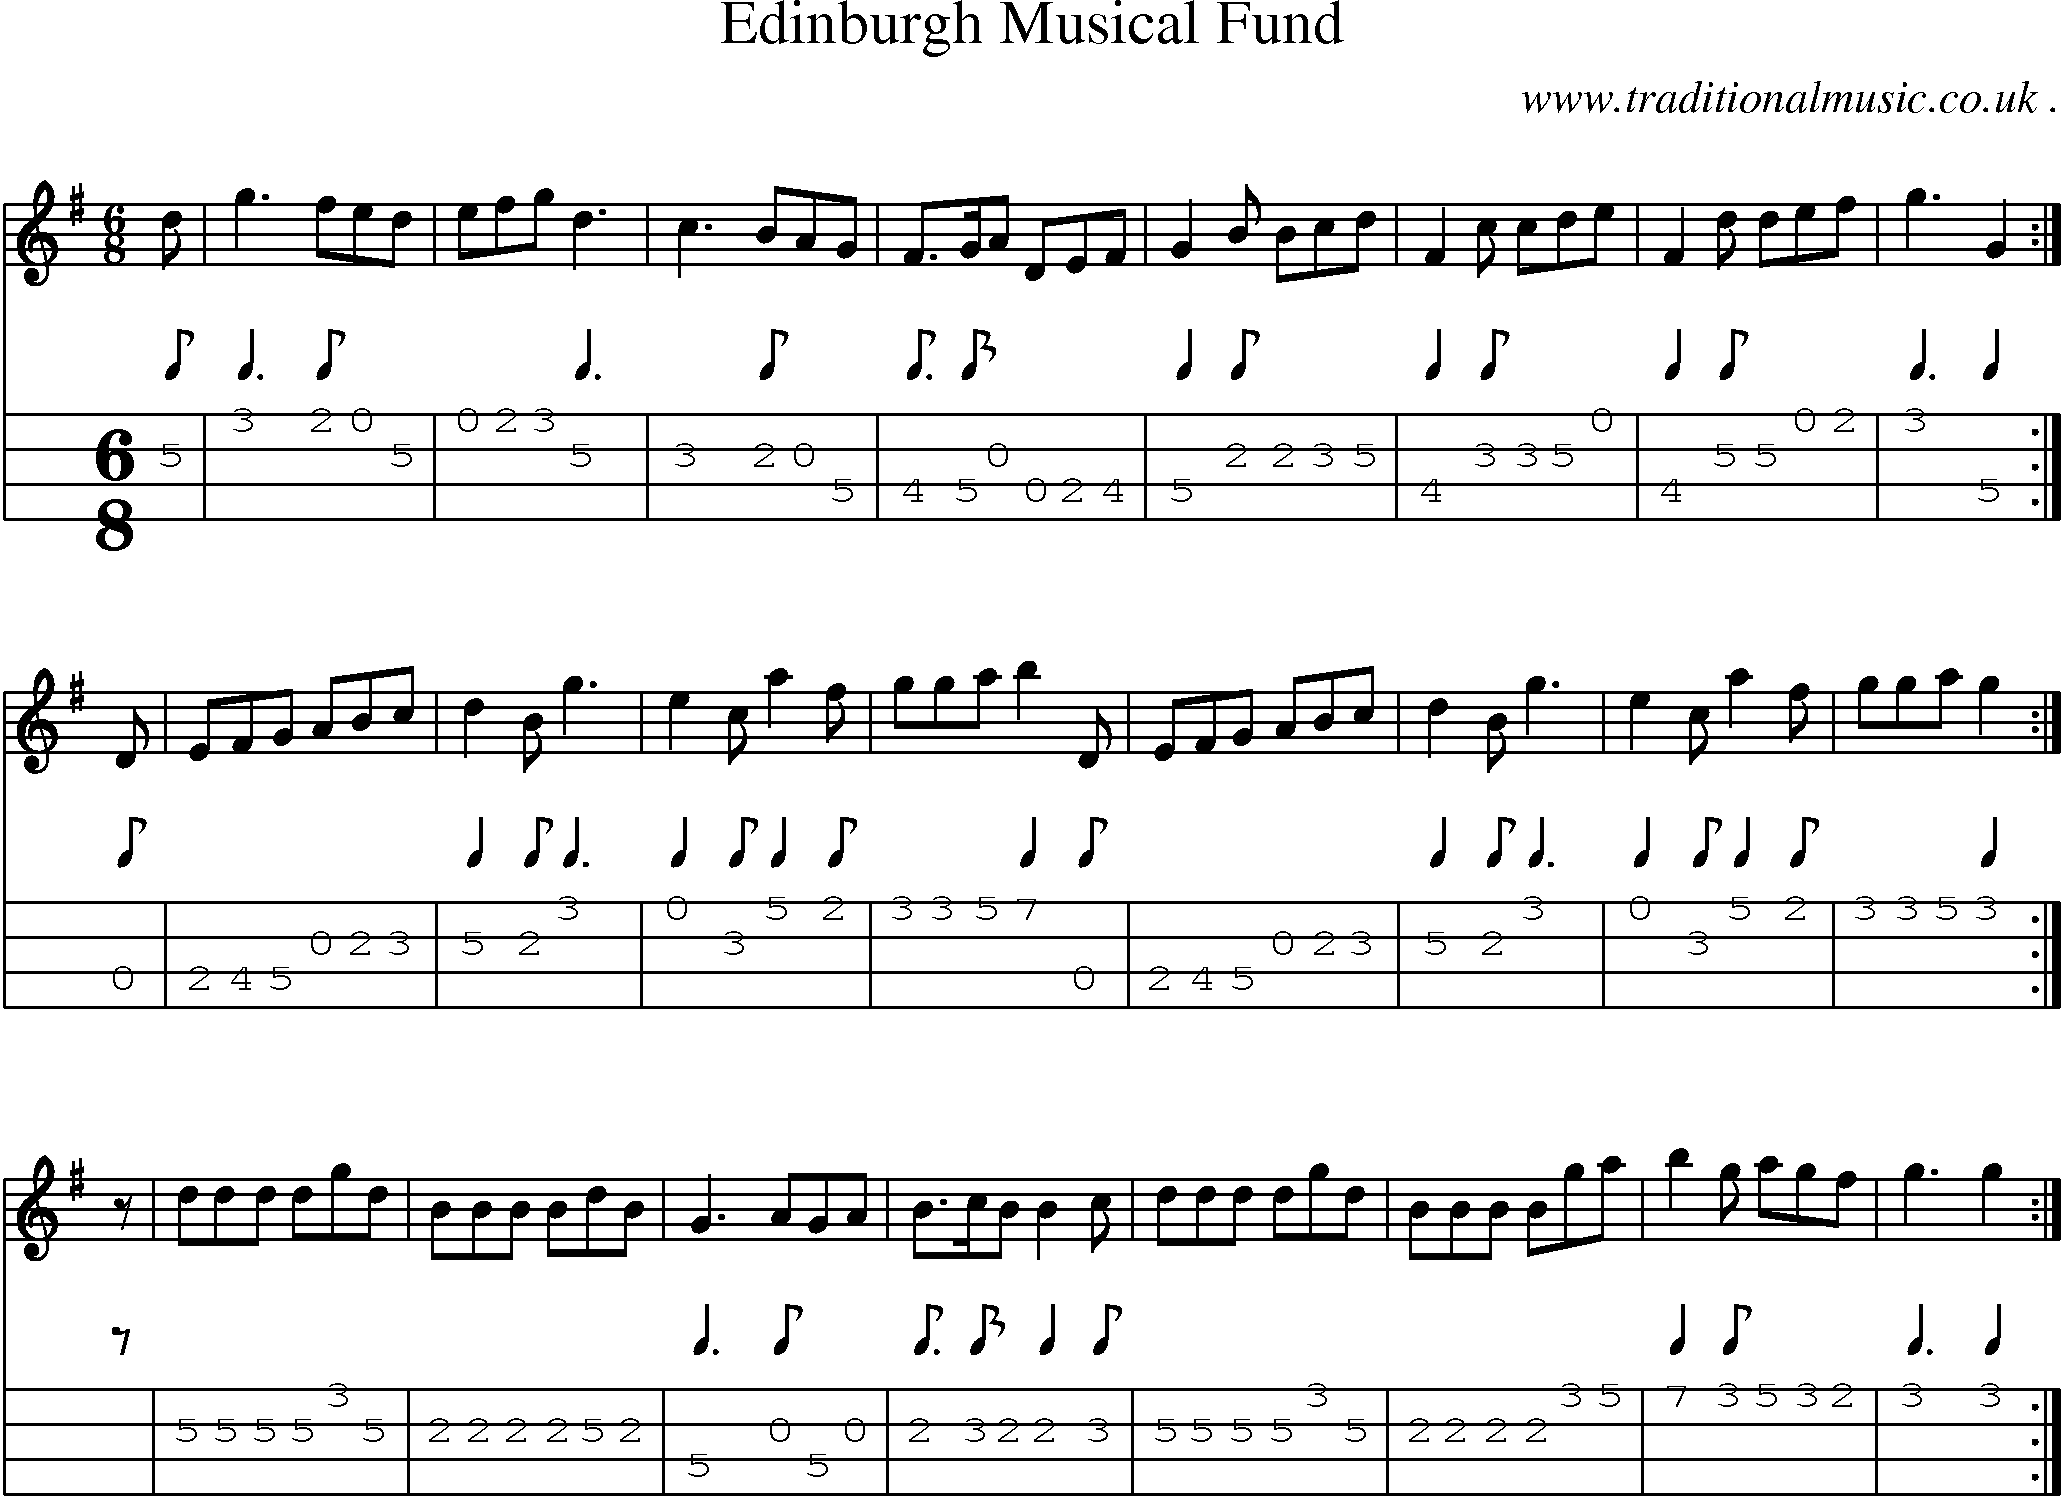 Sheet-music  score, Chords and Mandolin Tabs for Edinburgh Musical Fund